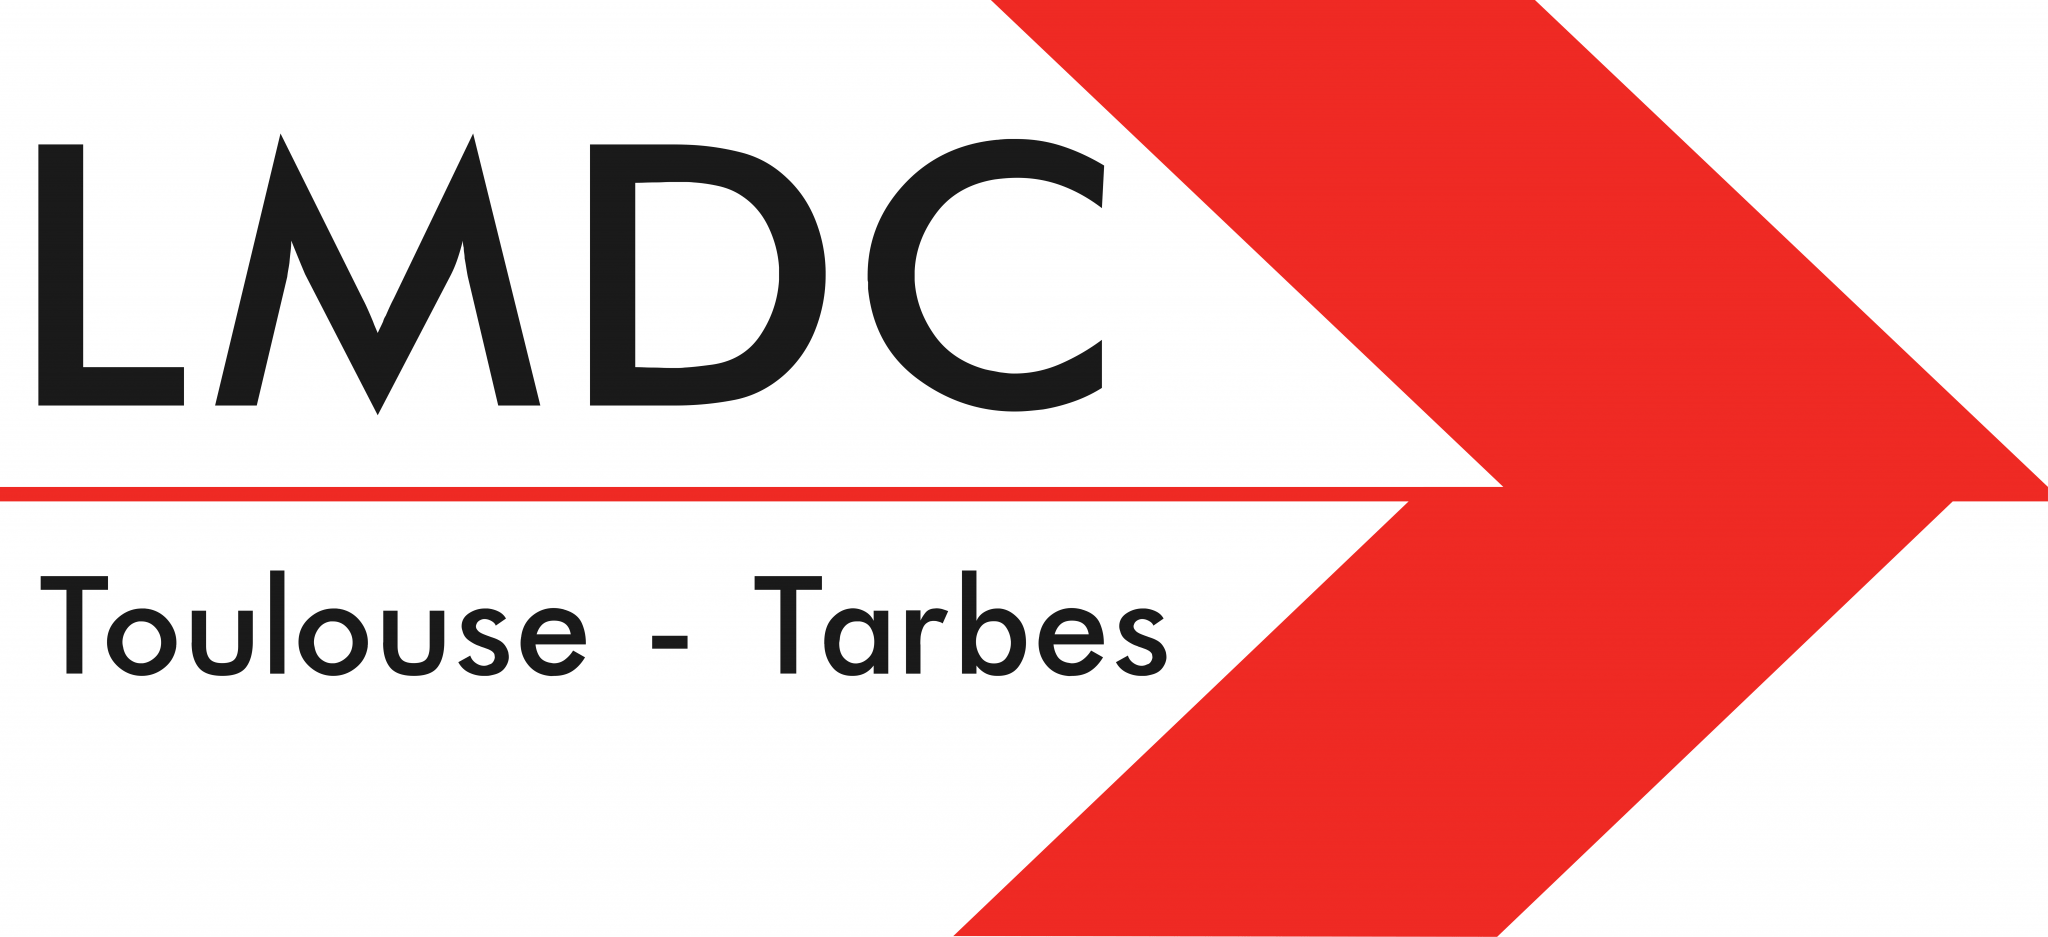 Logo-lmdc-2021-2048x937.png